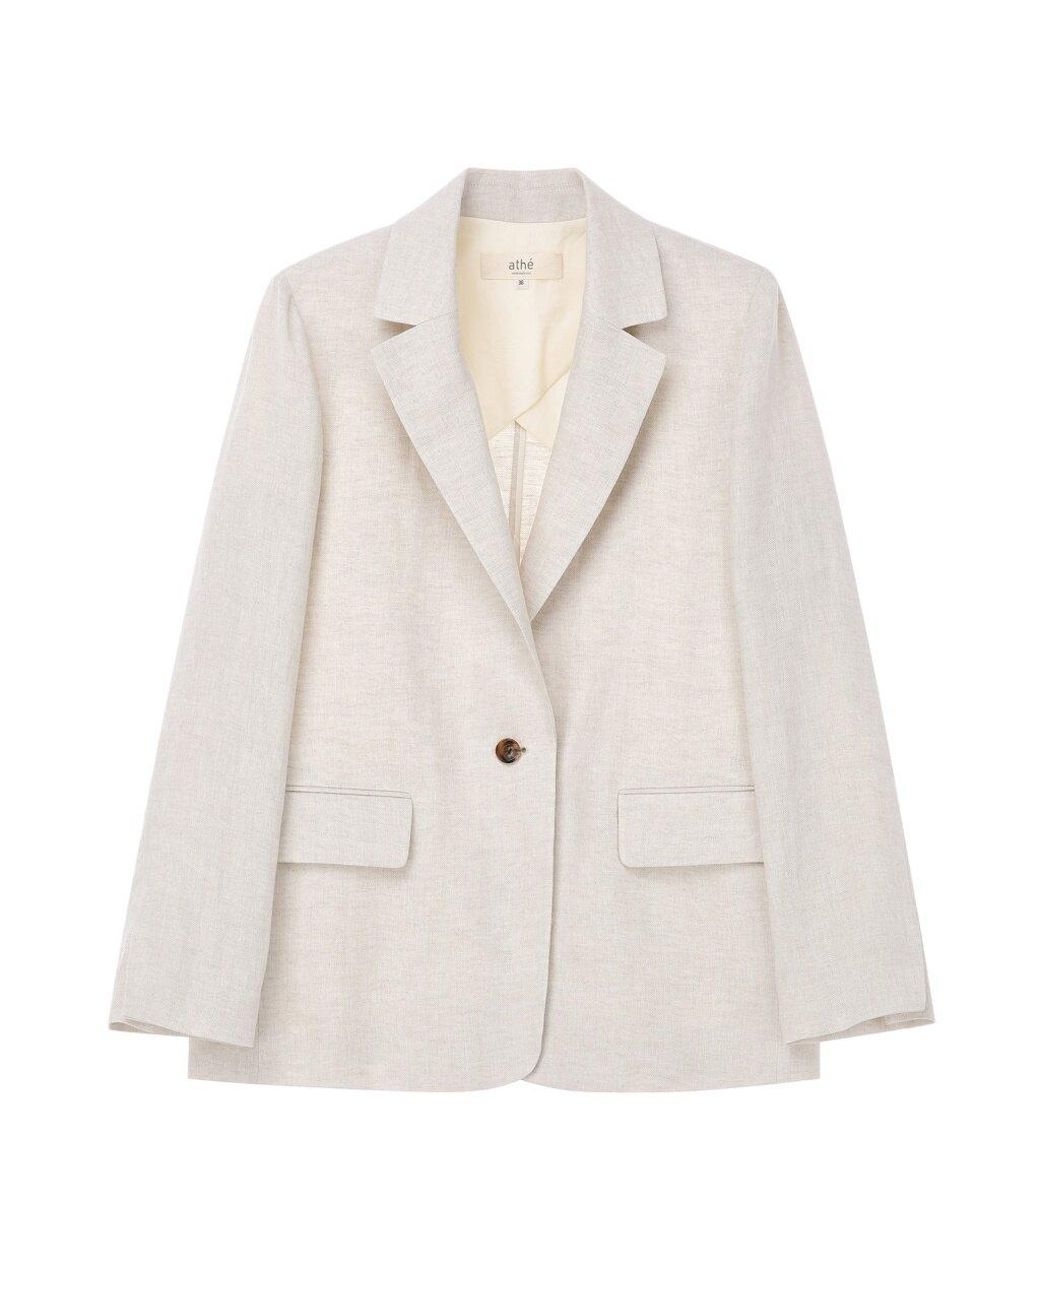 Vanessa Bruno Linen Herringbone Jacket in Pale Beige (White) | Lyst